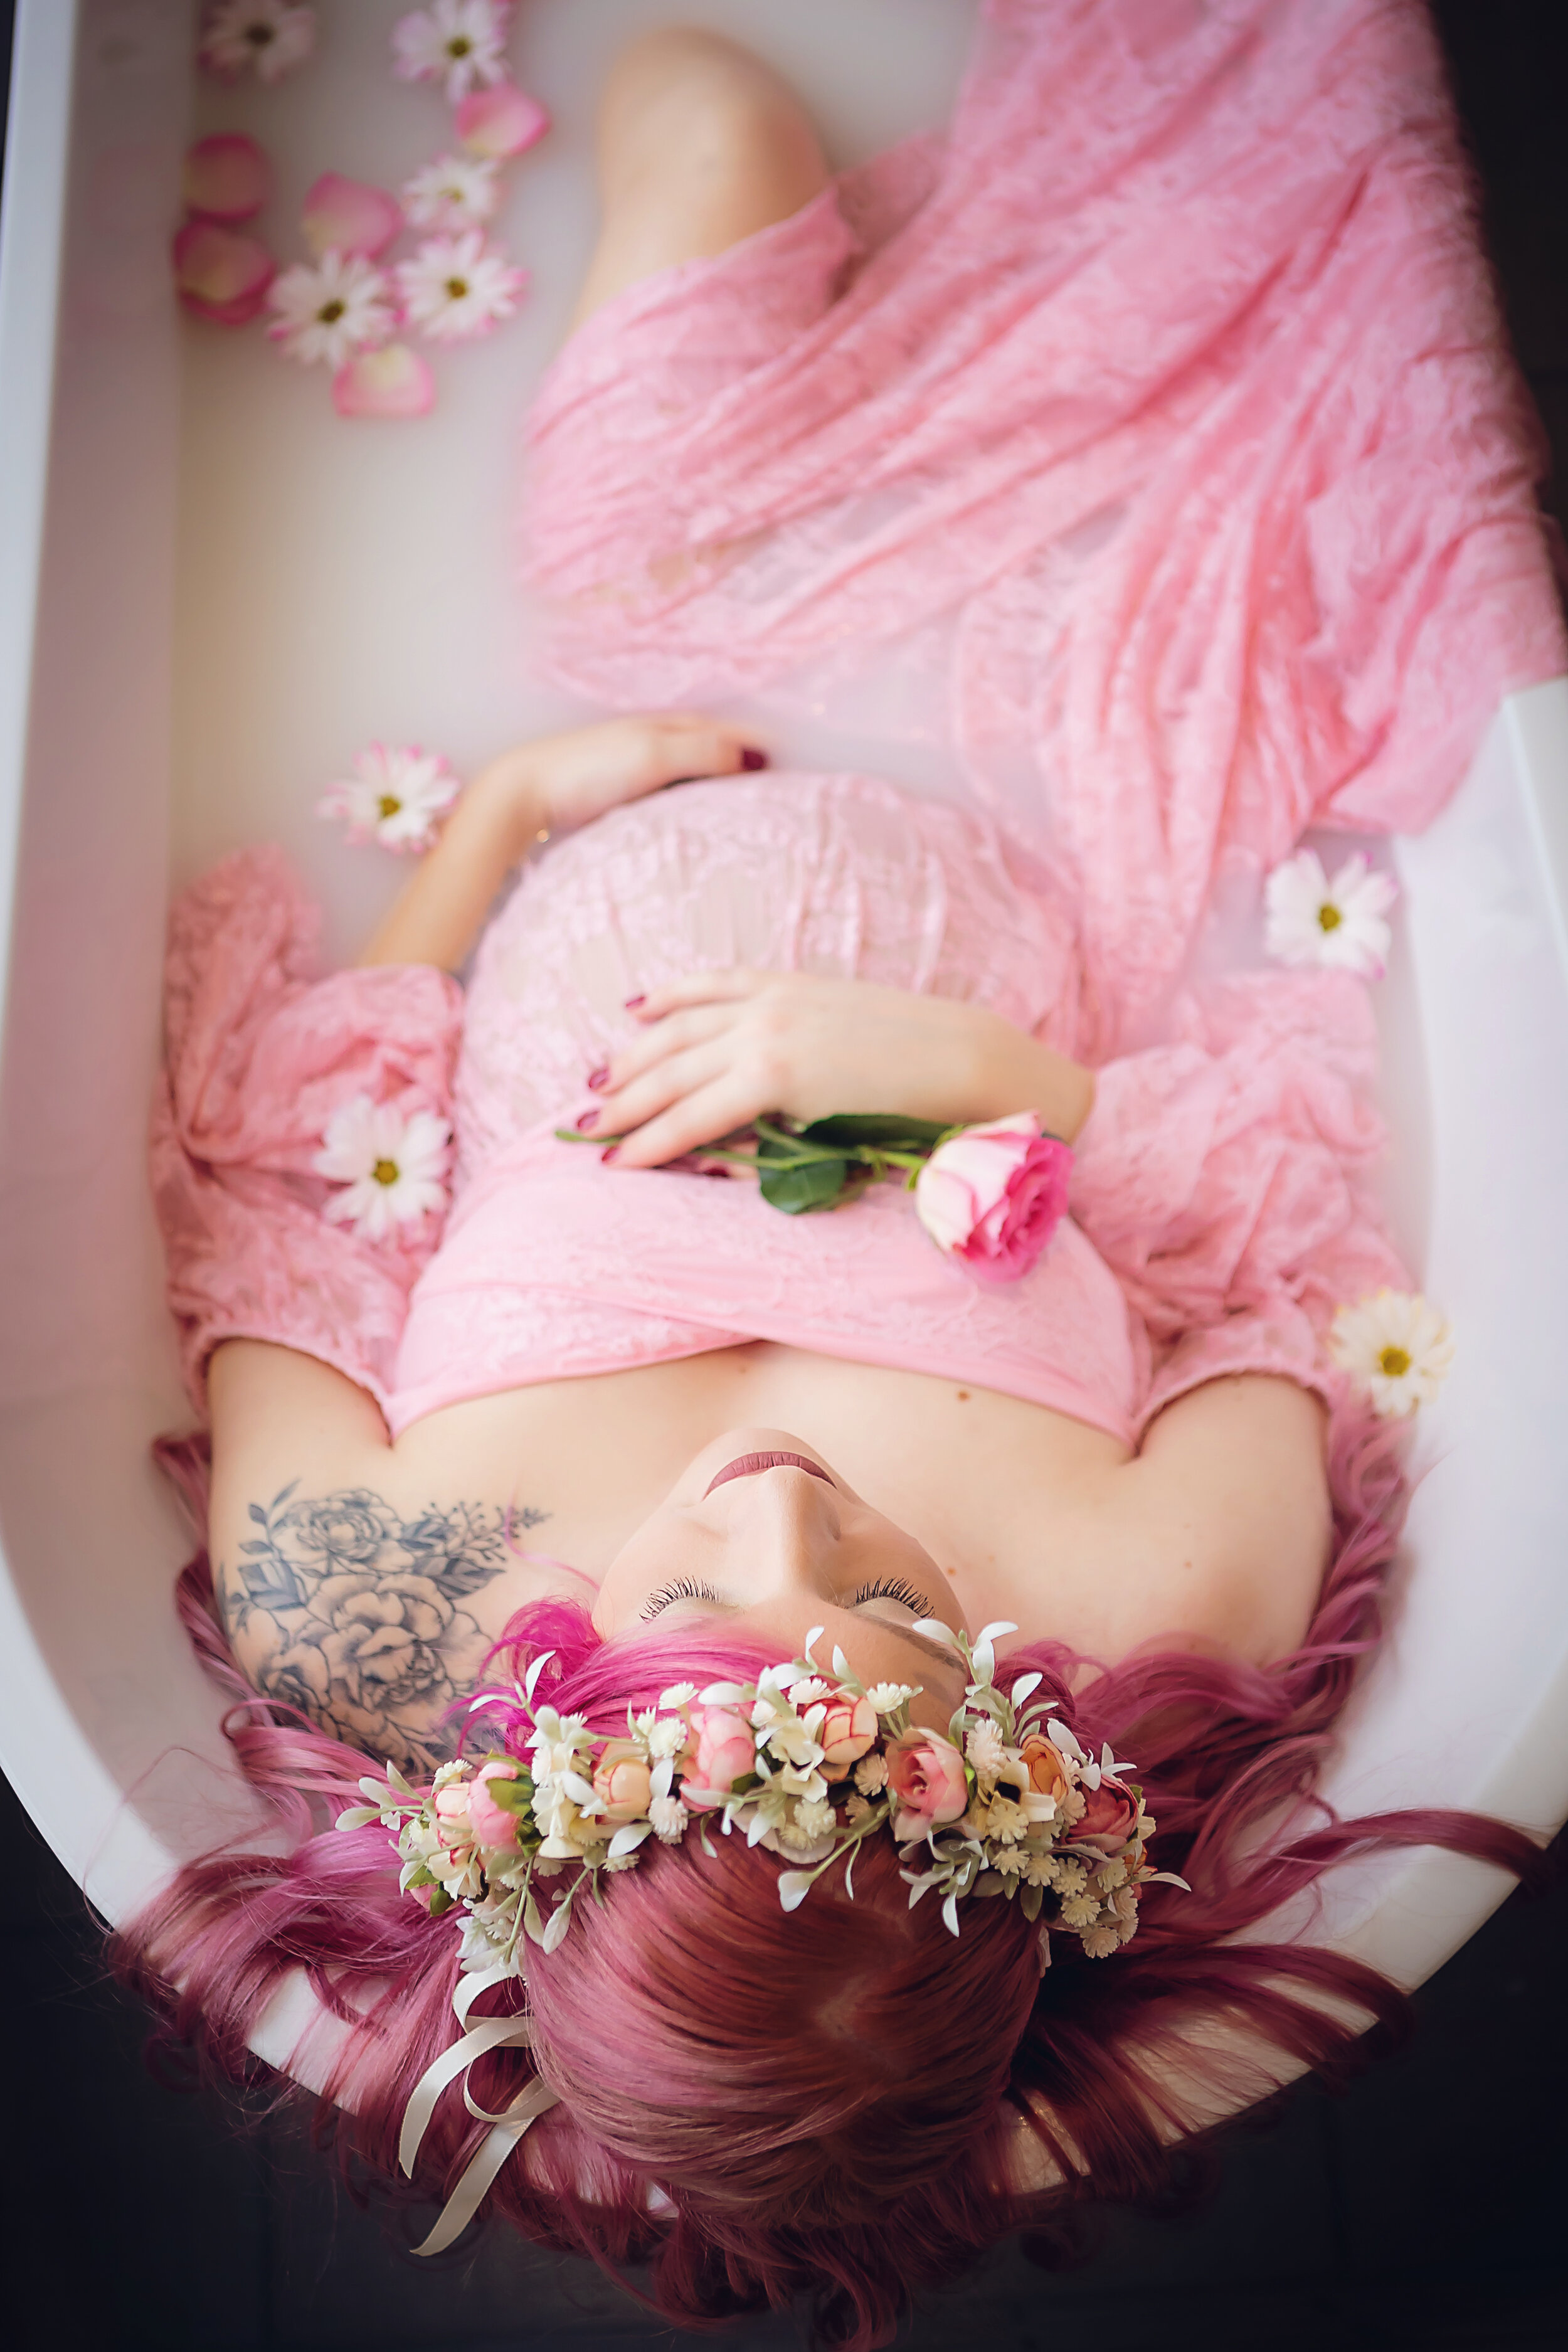 Indianapolis-newborn-maternity-childrens-photographer-Rozmilkbath-2201.jpg